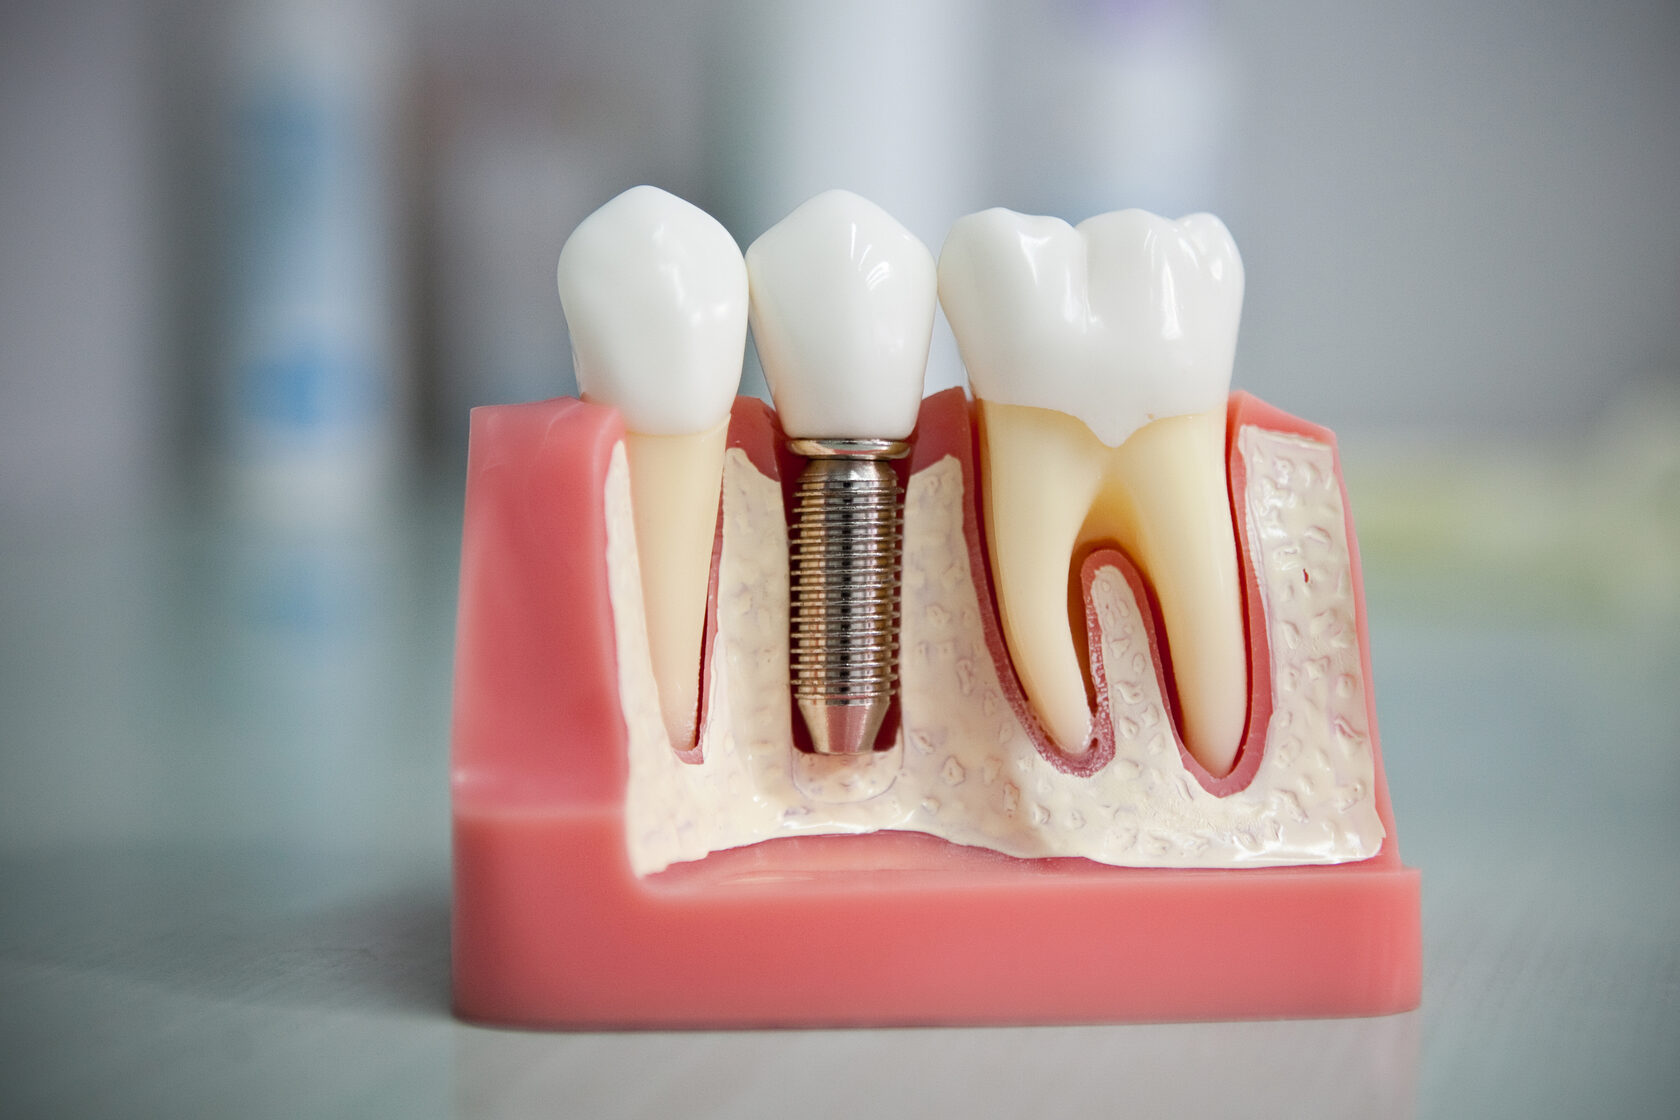 Реабилитация после имплантации зубов: памятка пациентам